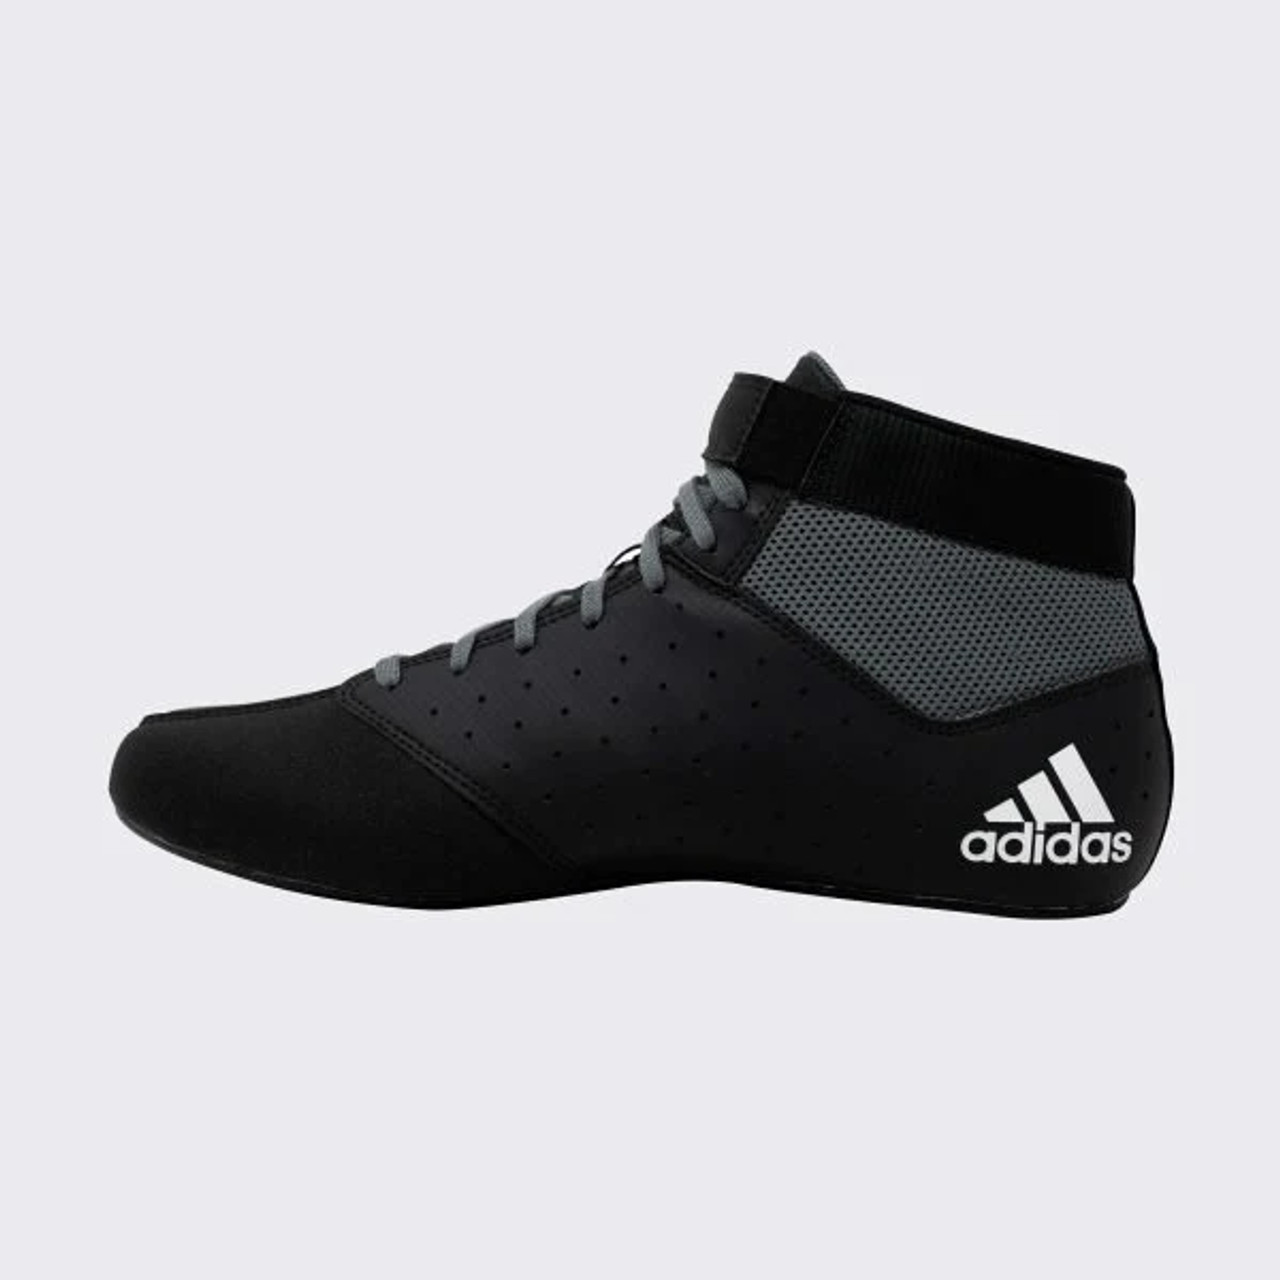 Adidas Mat Wizard 5 Wrestling Shoe White/Black/Grey Choose Size